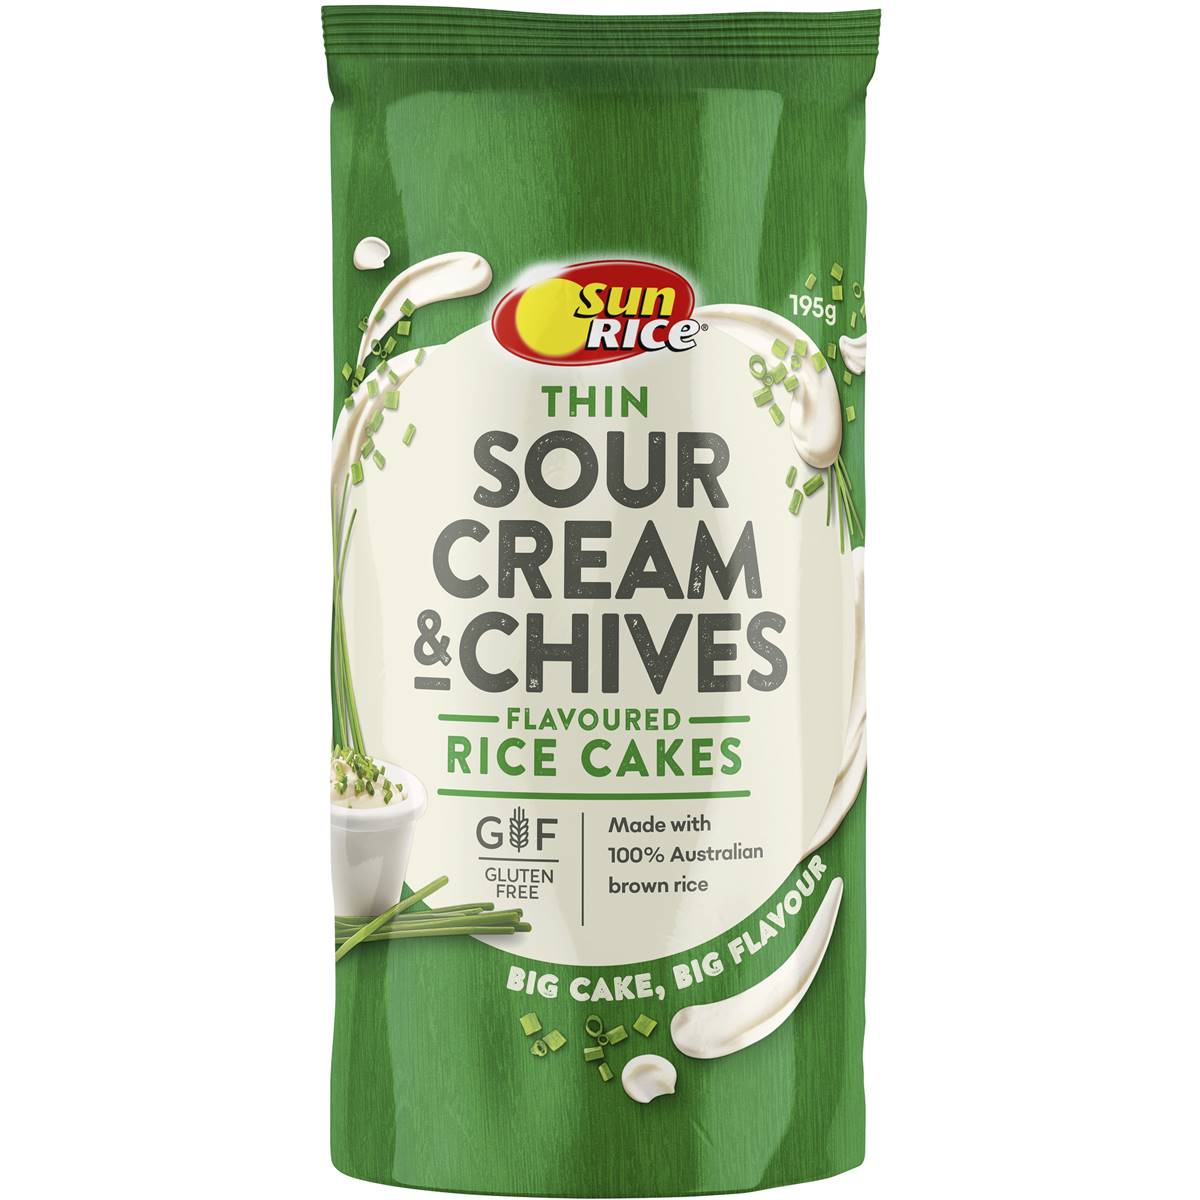 SunRice Sour Cream & Chives Thin Rice Cakes 195g